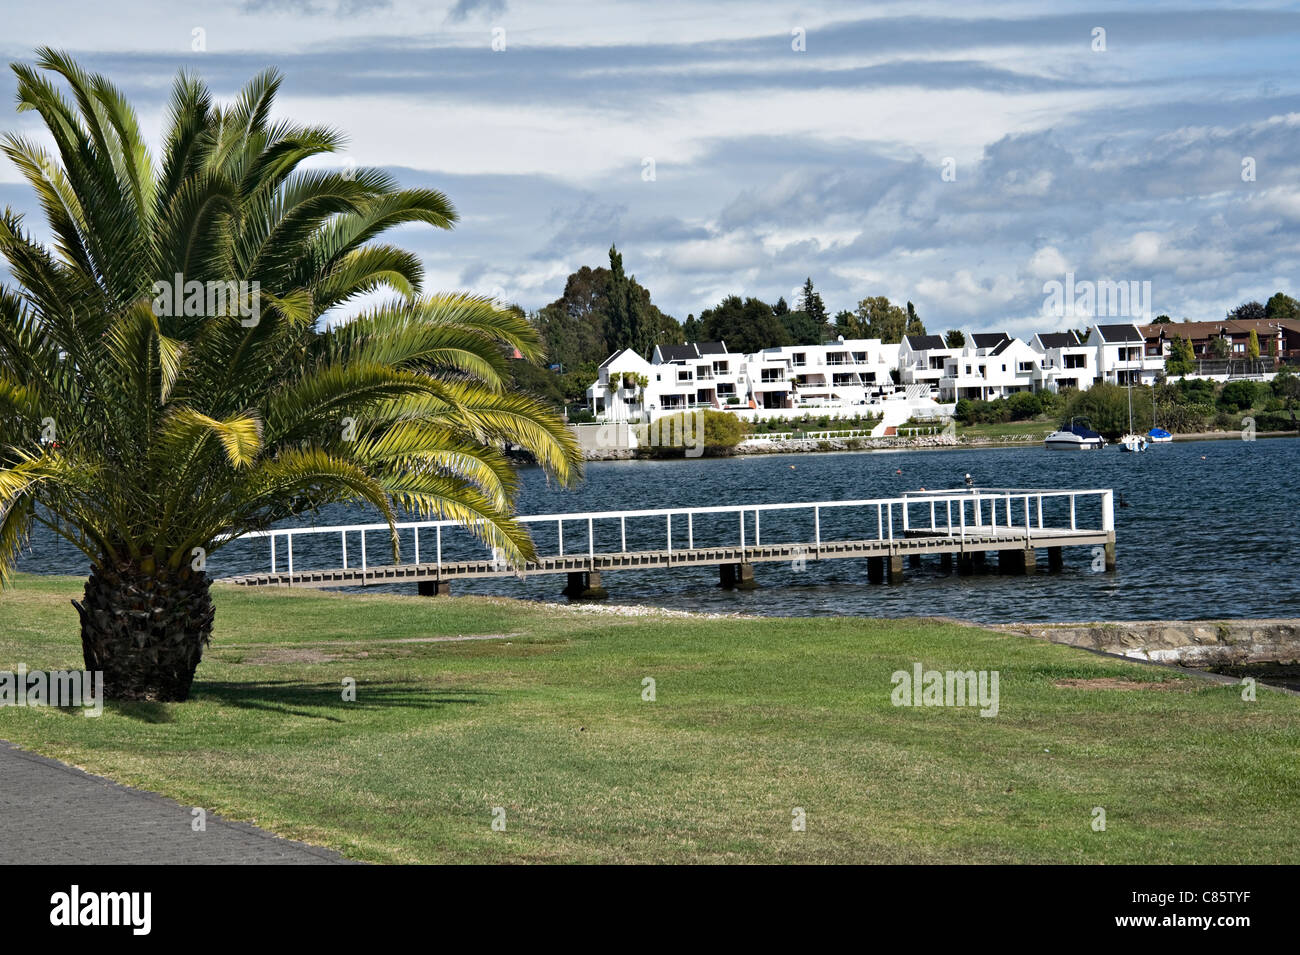 Schöne Lakeland Resort-Studio-Apartments an den Ufern des Lake Taupo Nordinsel Neuseeland Stockfoto